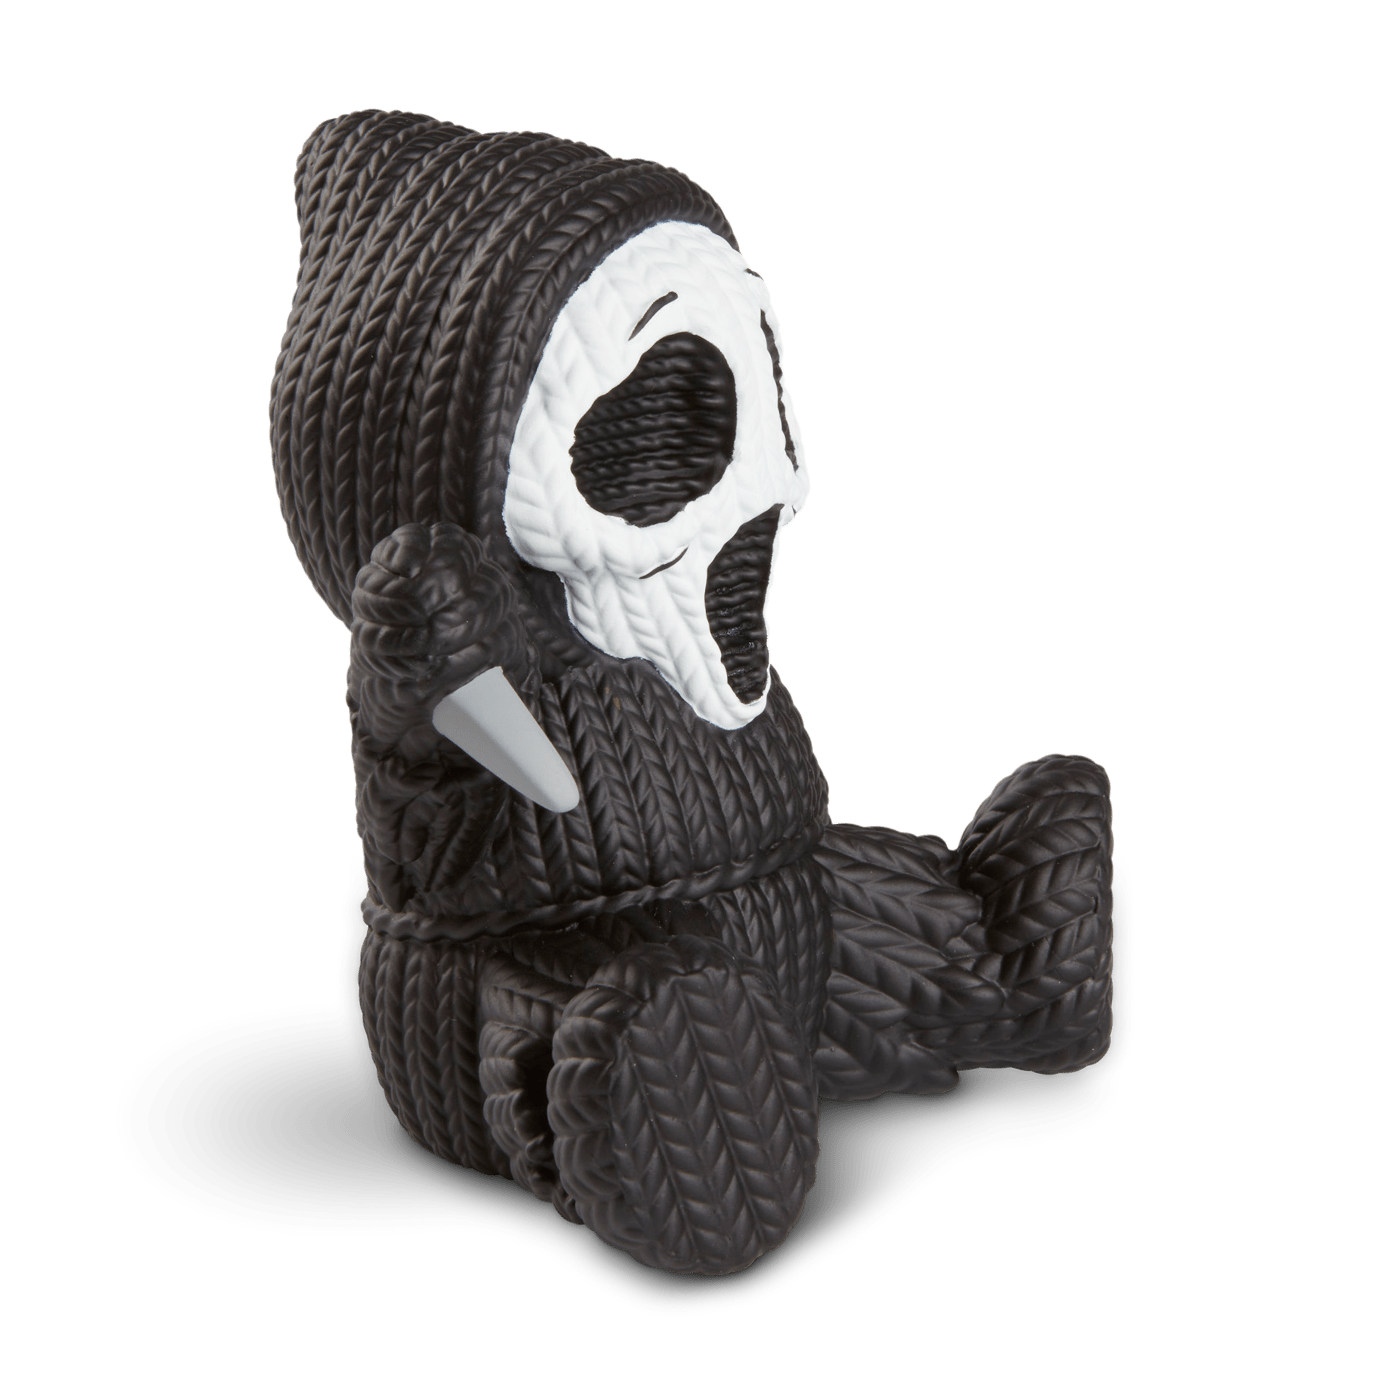 Ghost Face Devil Mask – Handmade by Robots Vinyl Figures